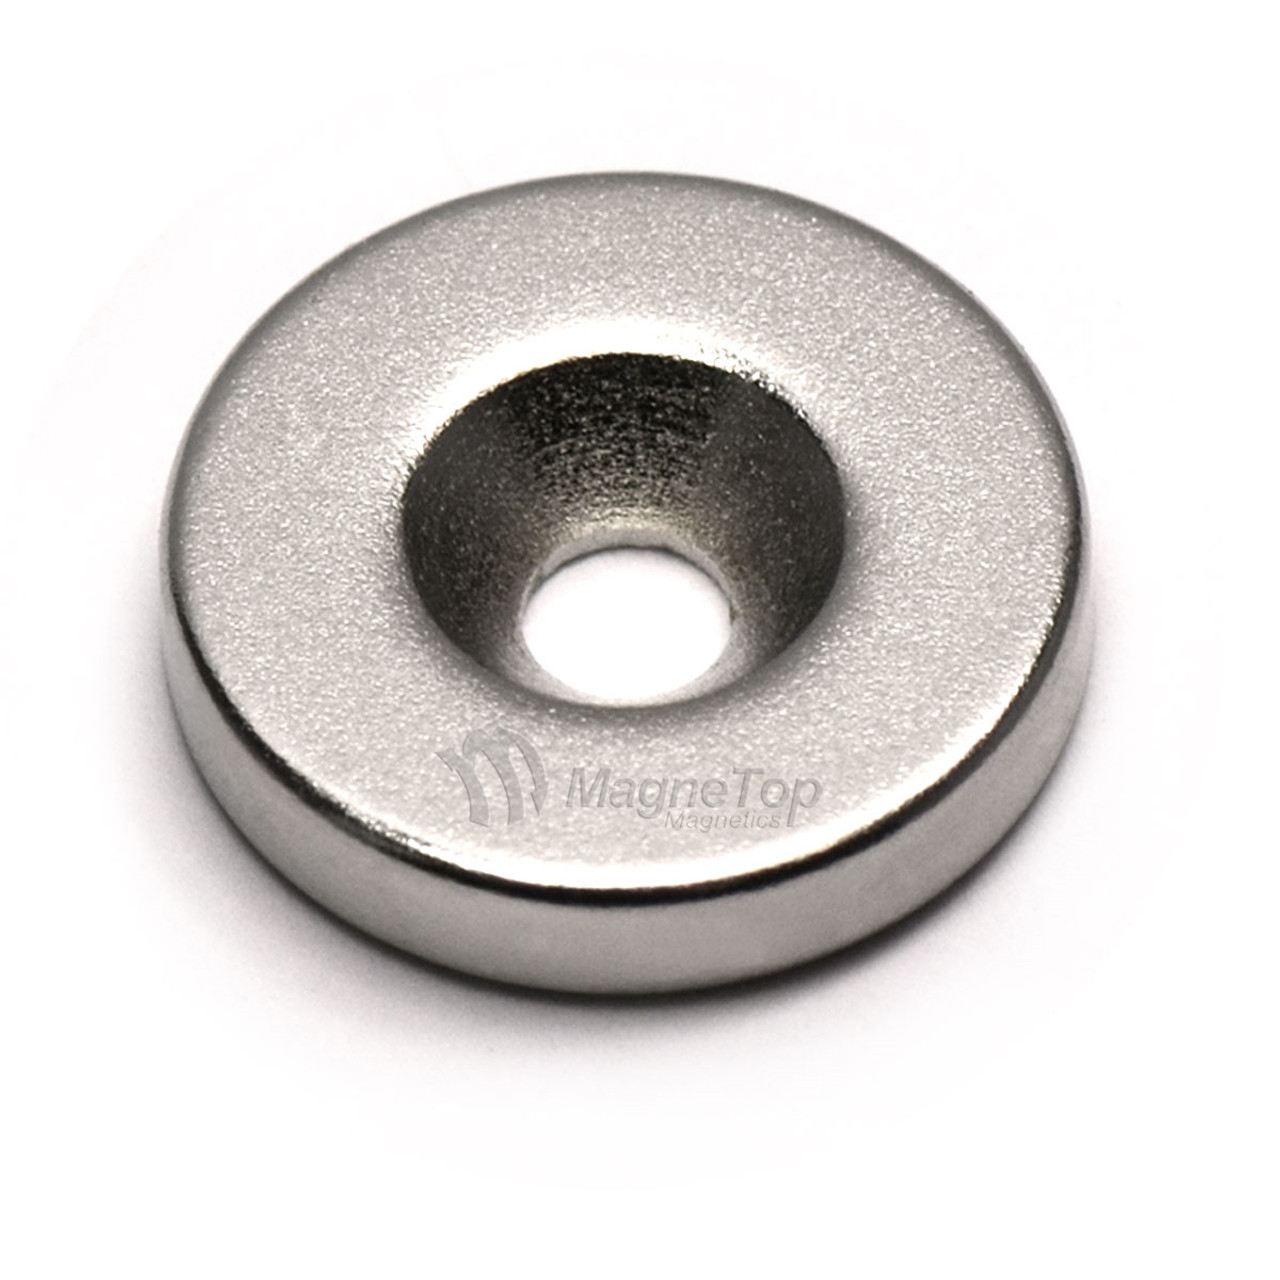 15.9mm x 3.2mm-N52-M4 Countersink on One Side | Neodymium Round Countersunk